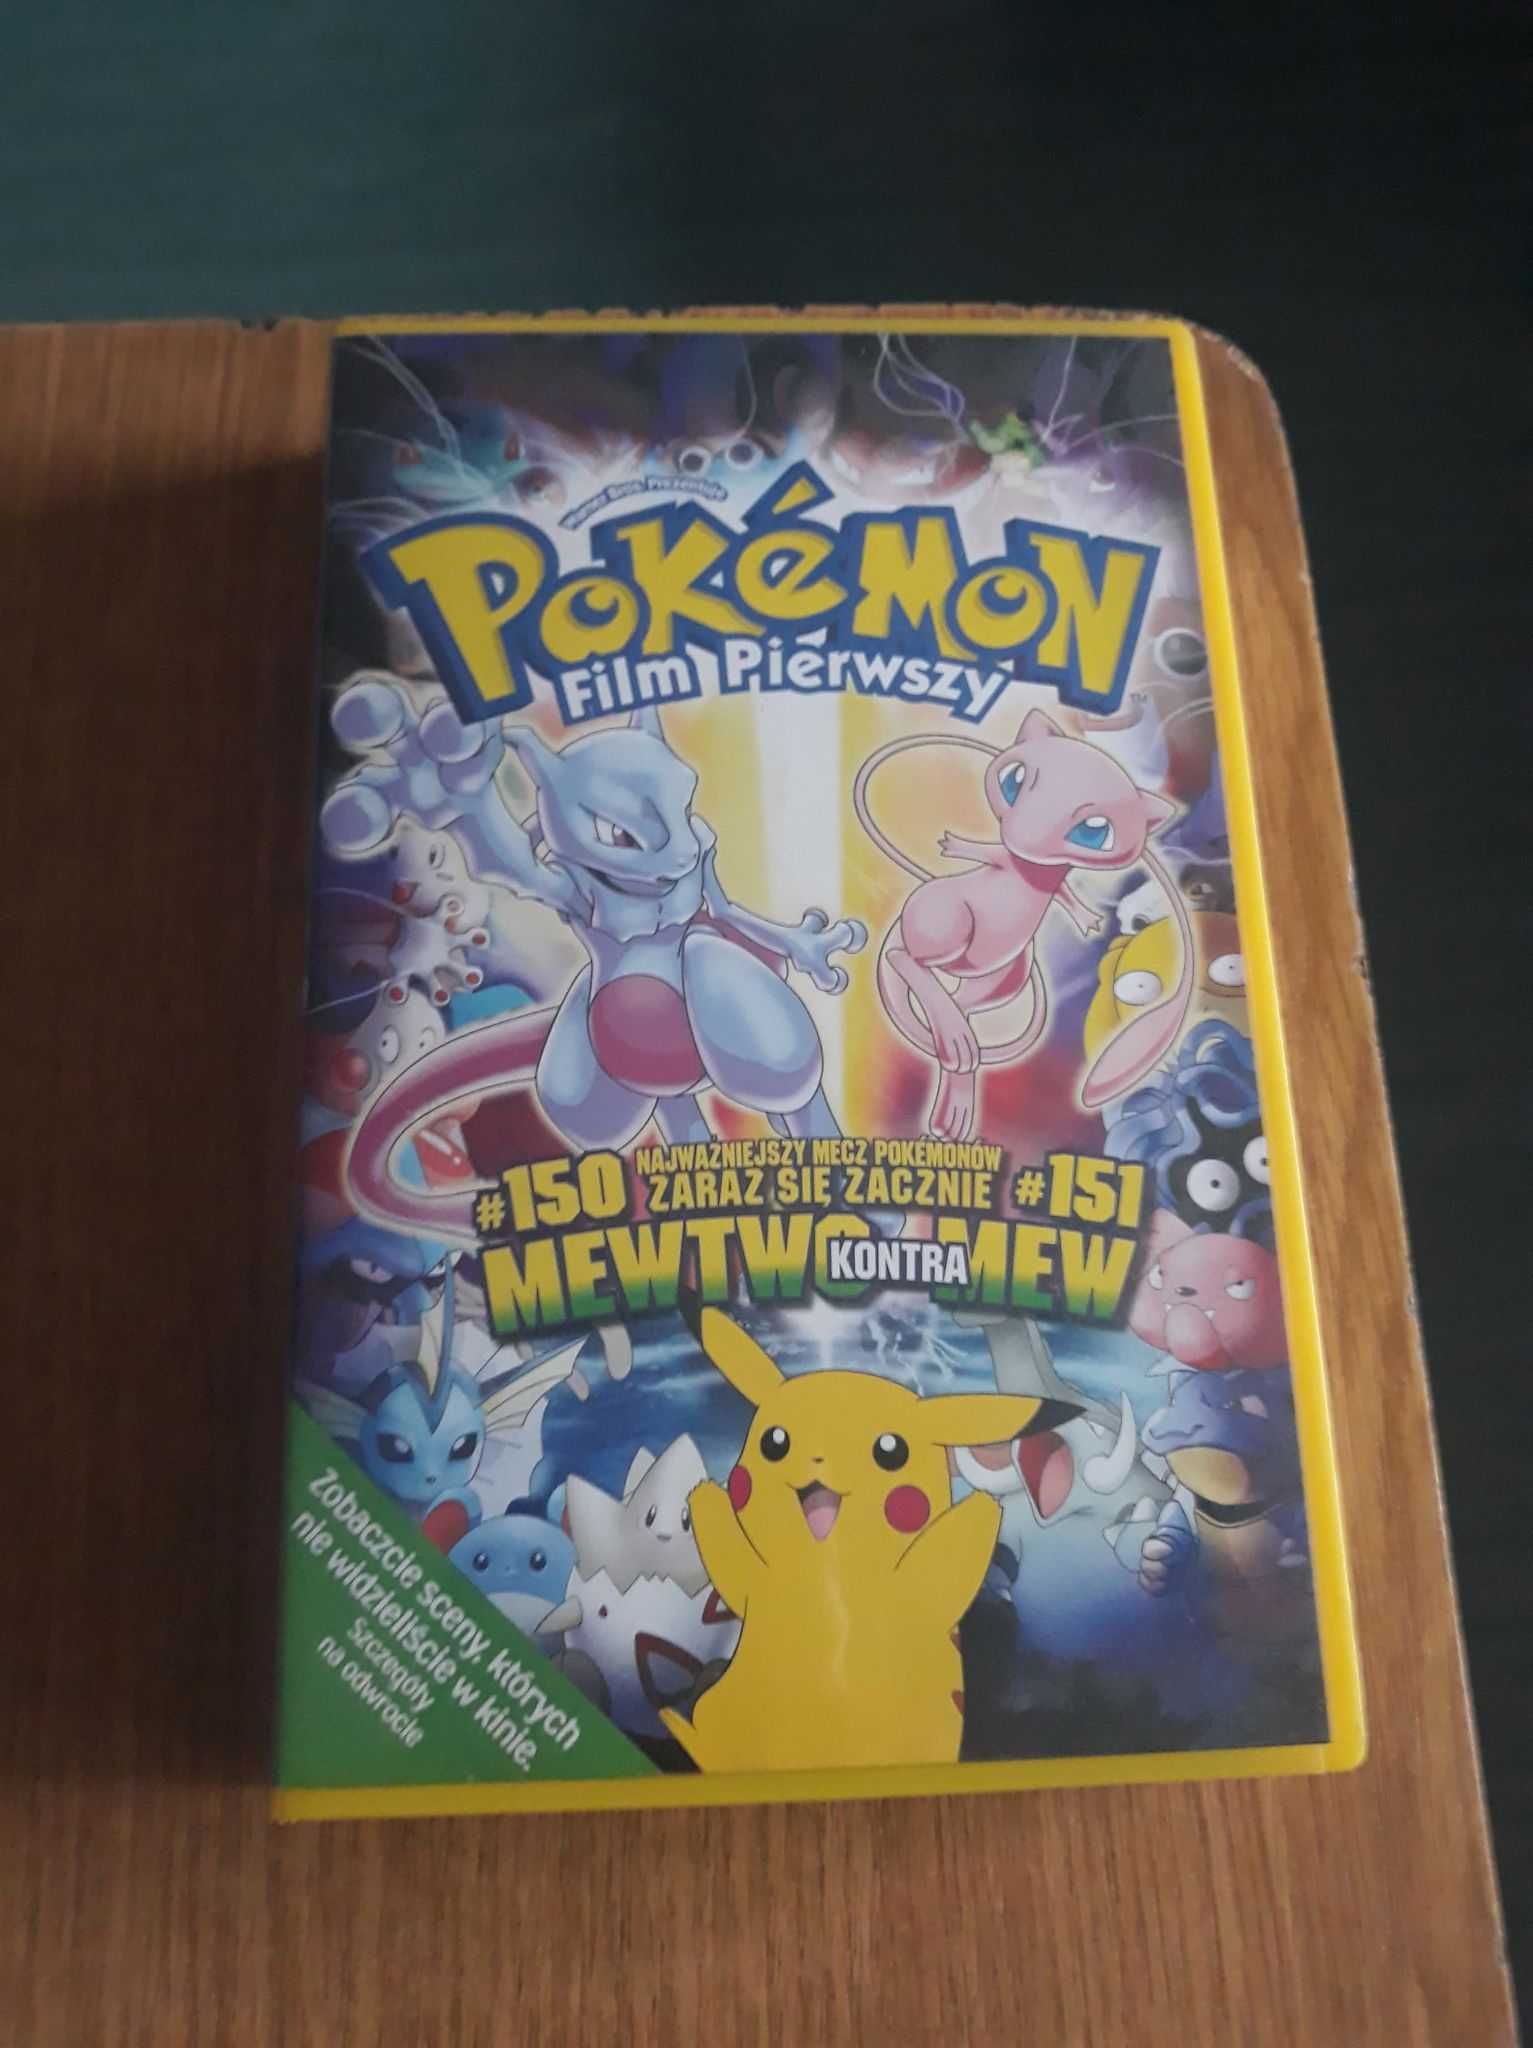 Pokemon film pierwszy, kaseta VHS, stan bardzo dobry